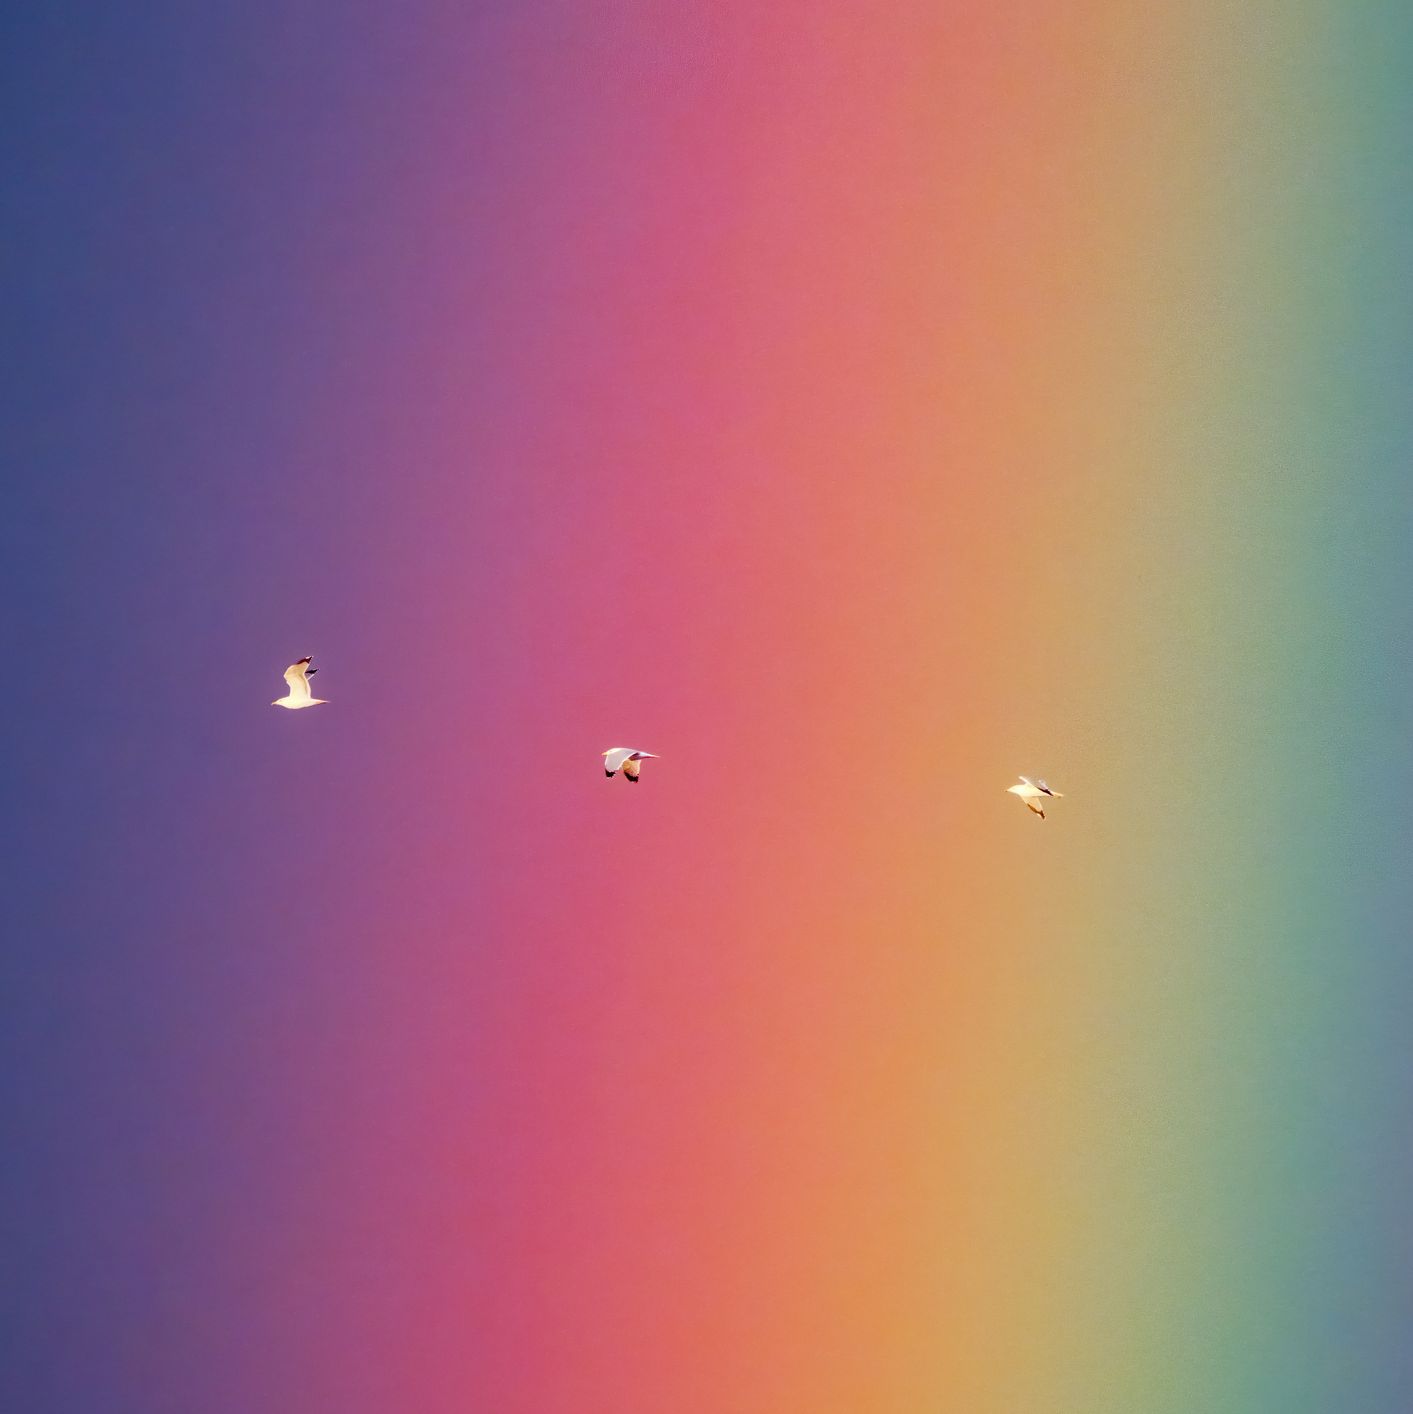 seagulls flying over a rainbow, telephoto lenswild life